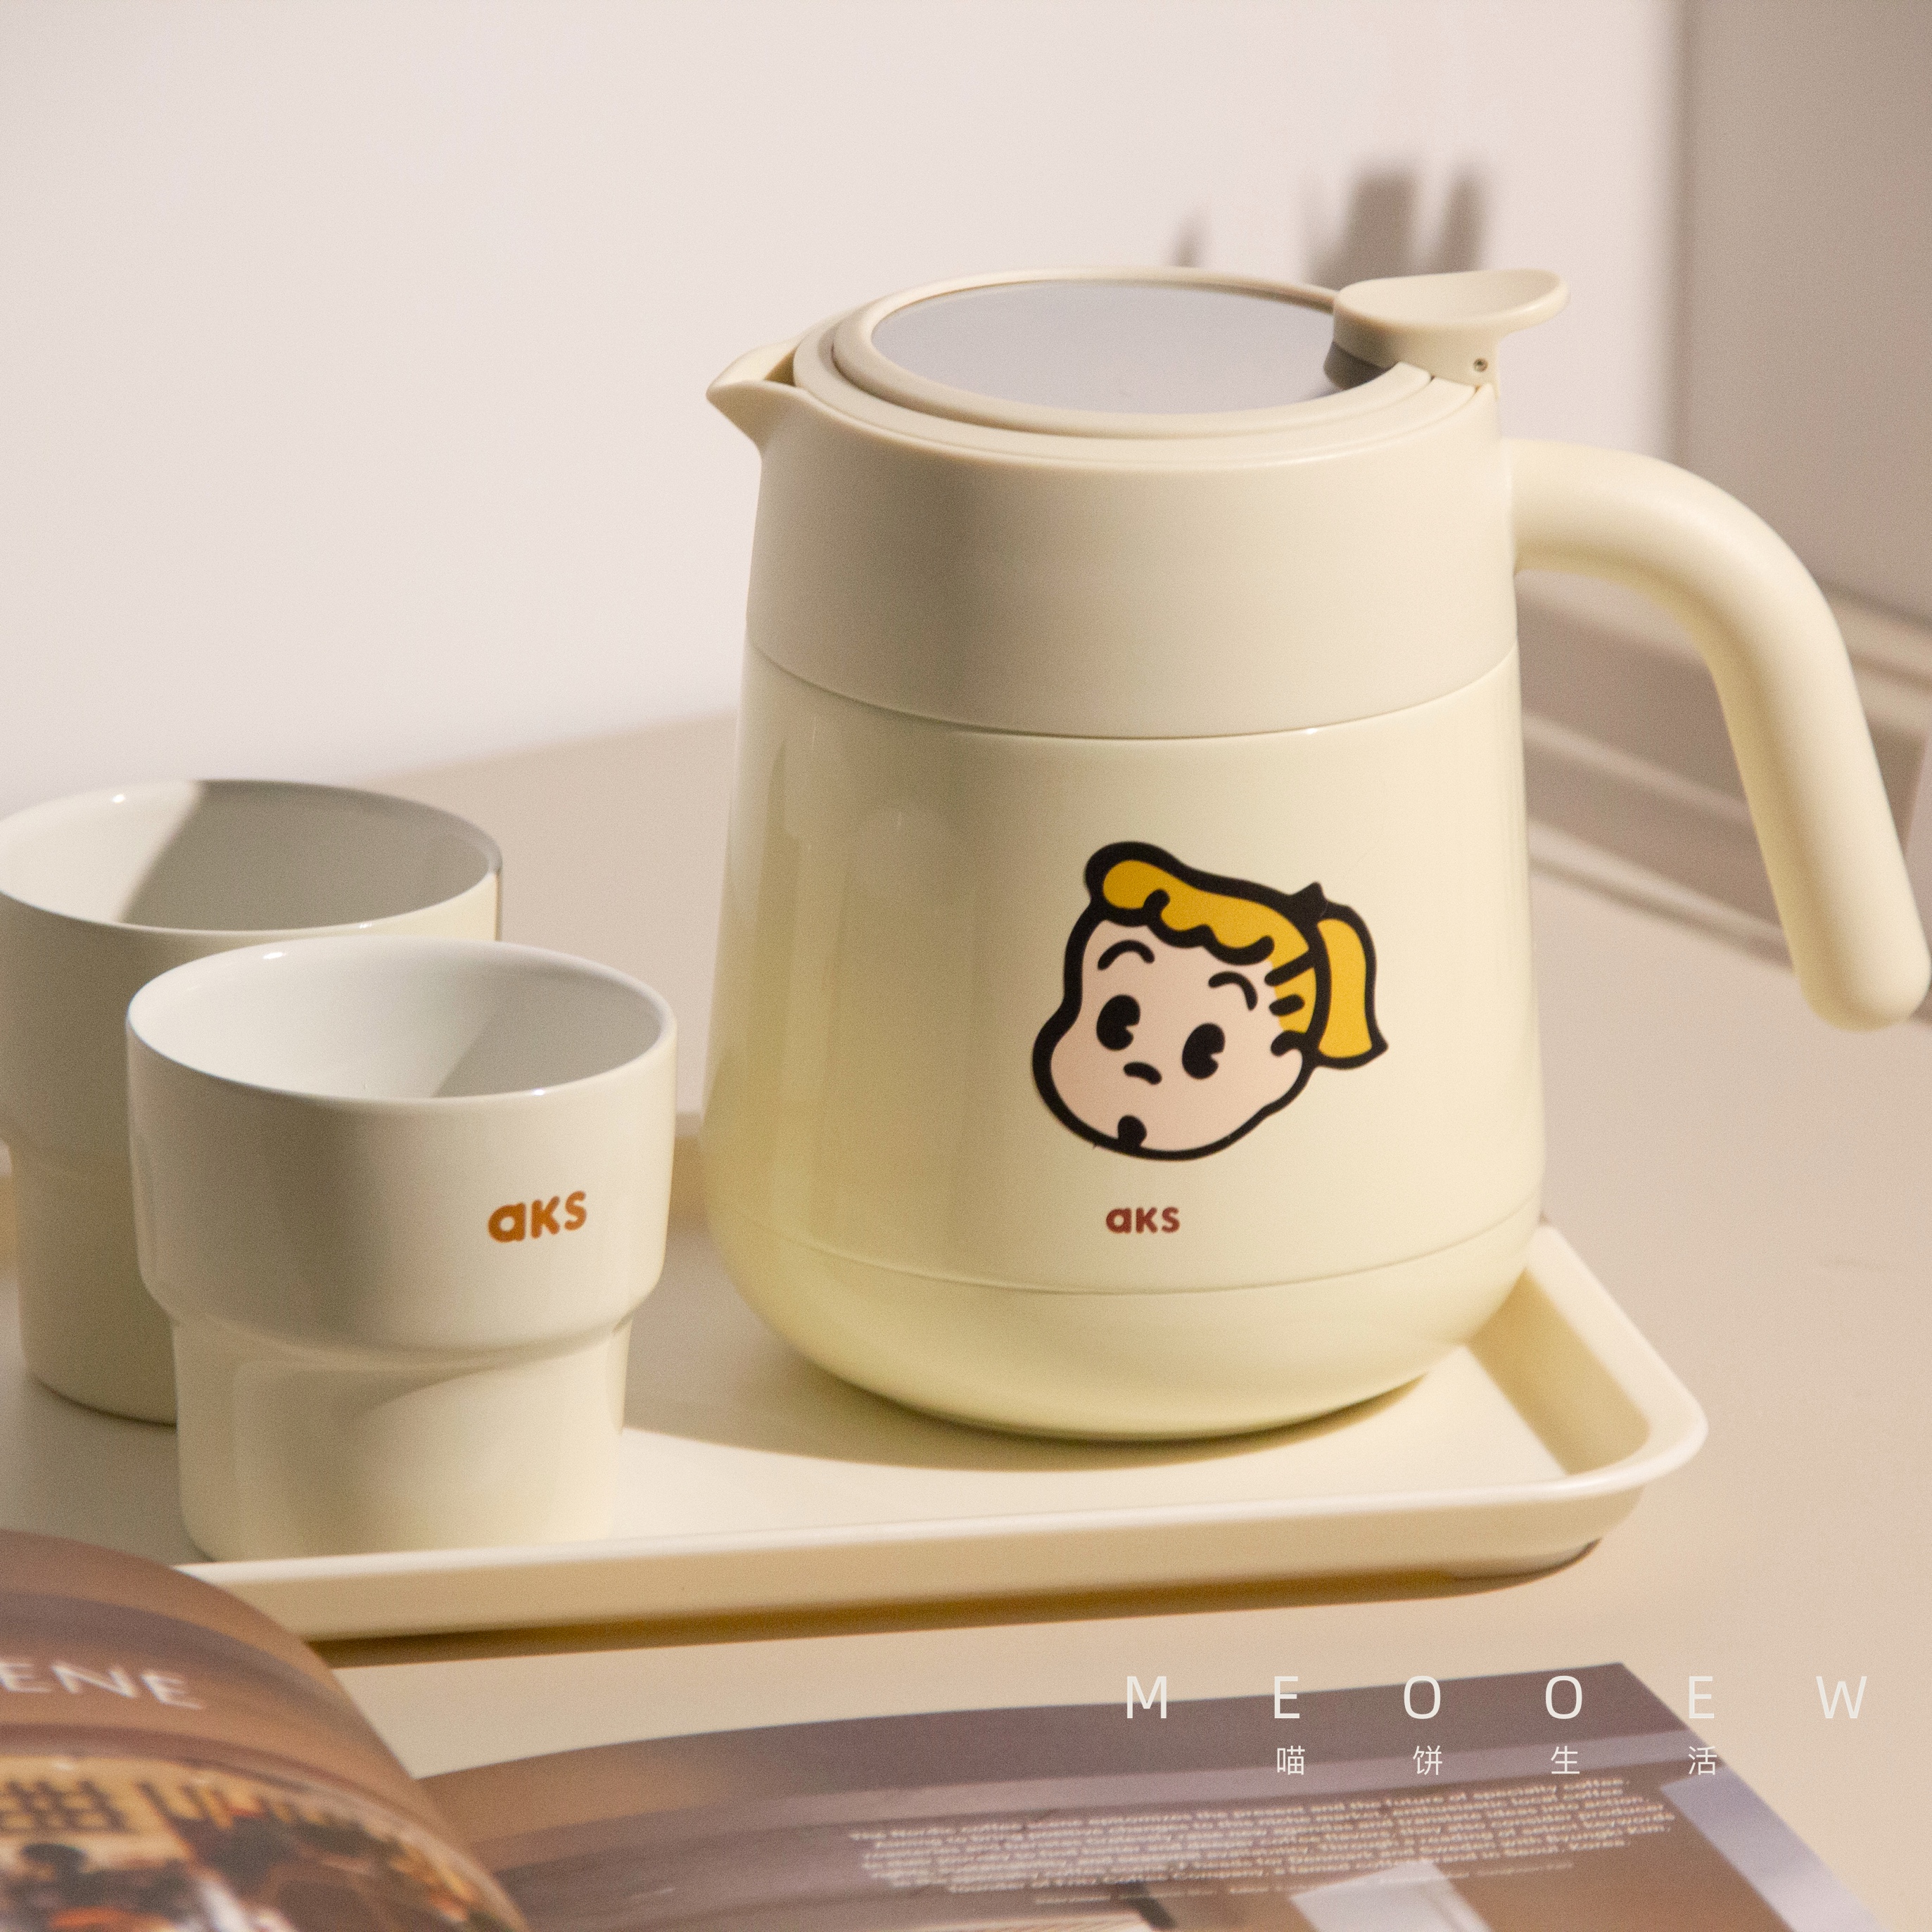 aks拎拎壶茶水分离保温壶奶白色高颜值办公室家用陶瓷内胆焖茶壶